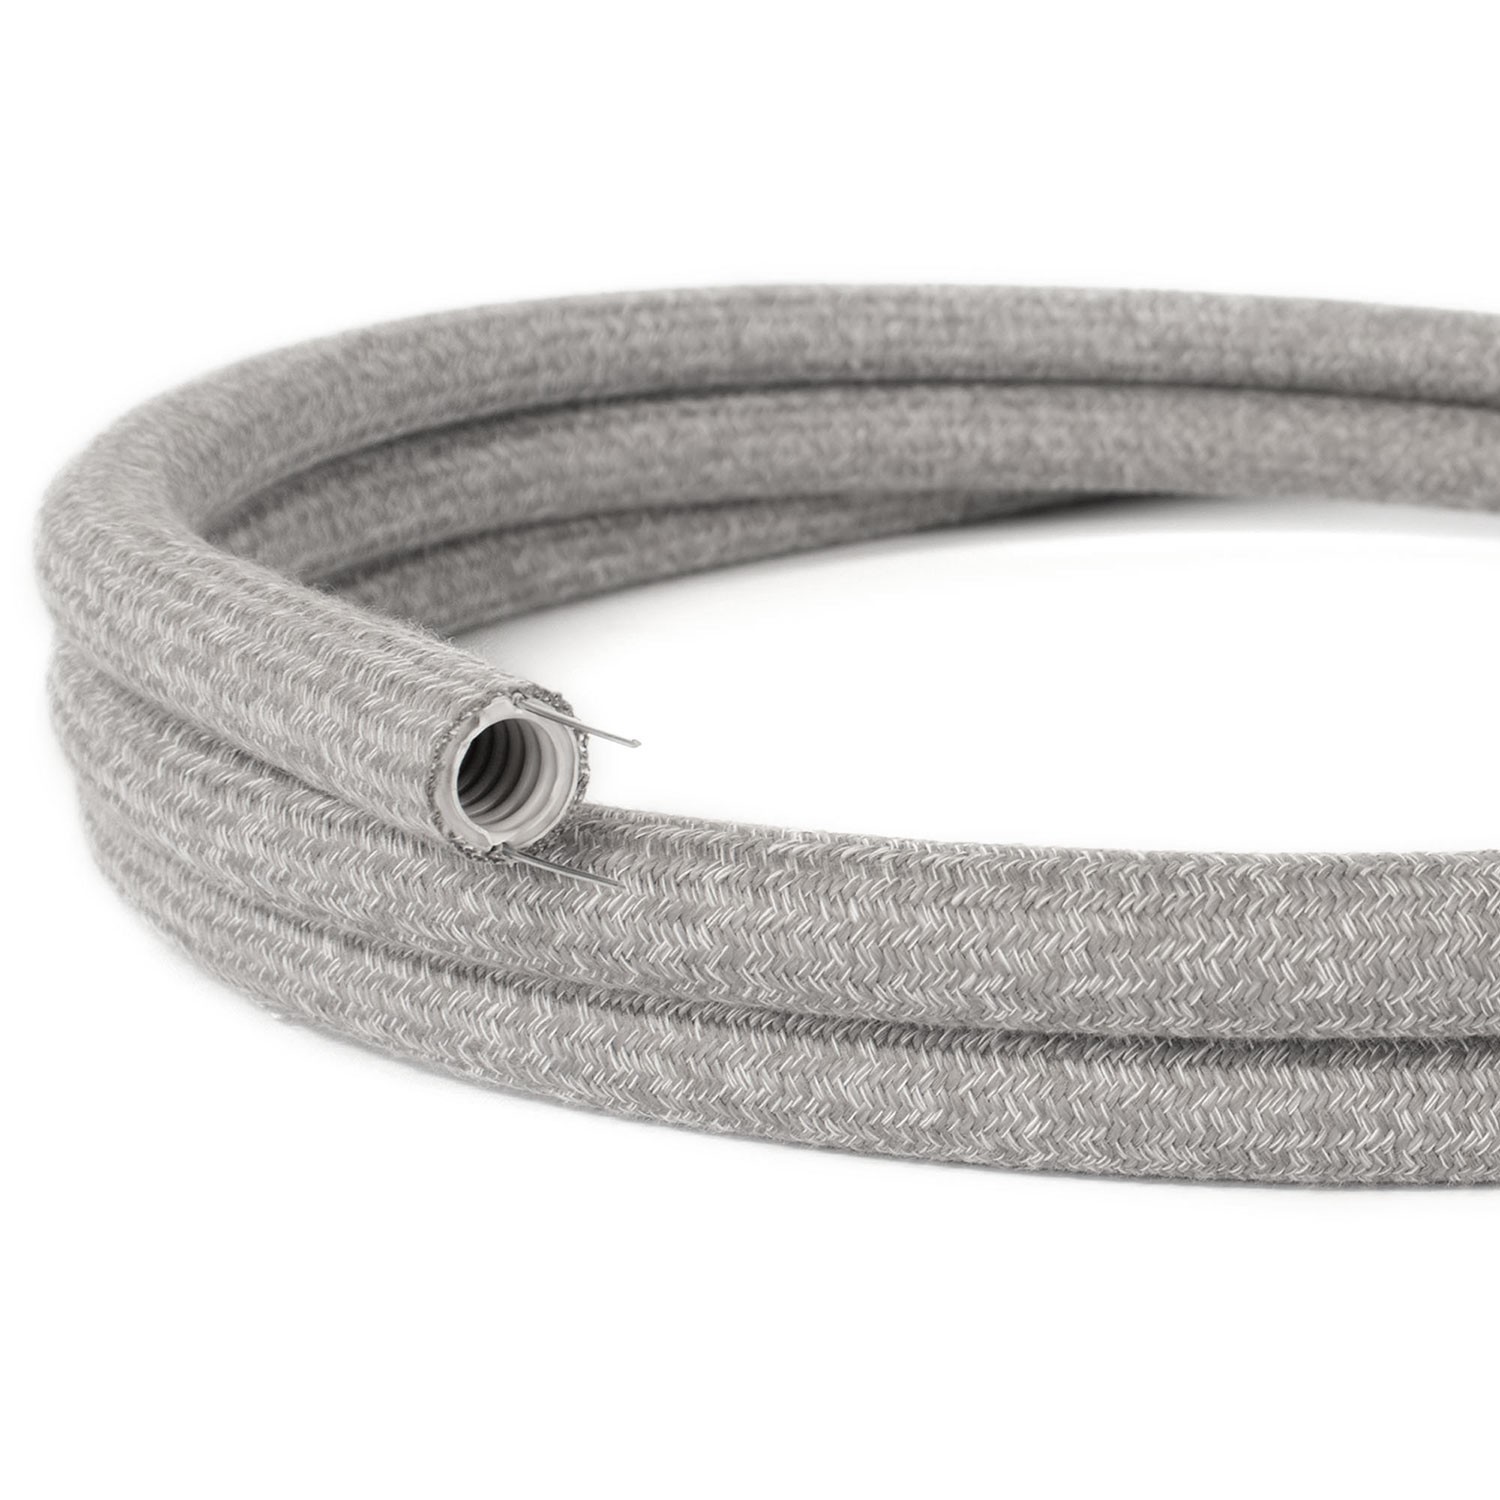 Creative-Tube flexible conduit, Grey Natural Linen RN02 fabric covering, diameter 20 mm